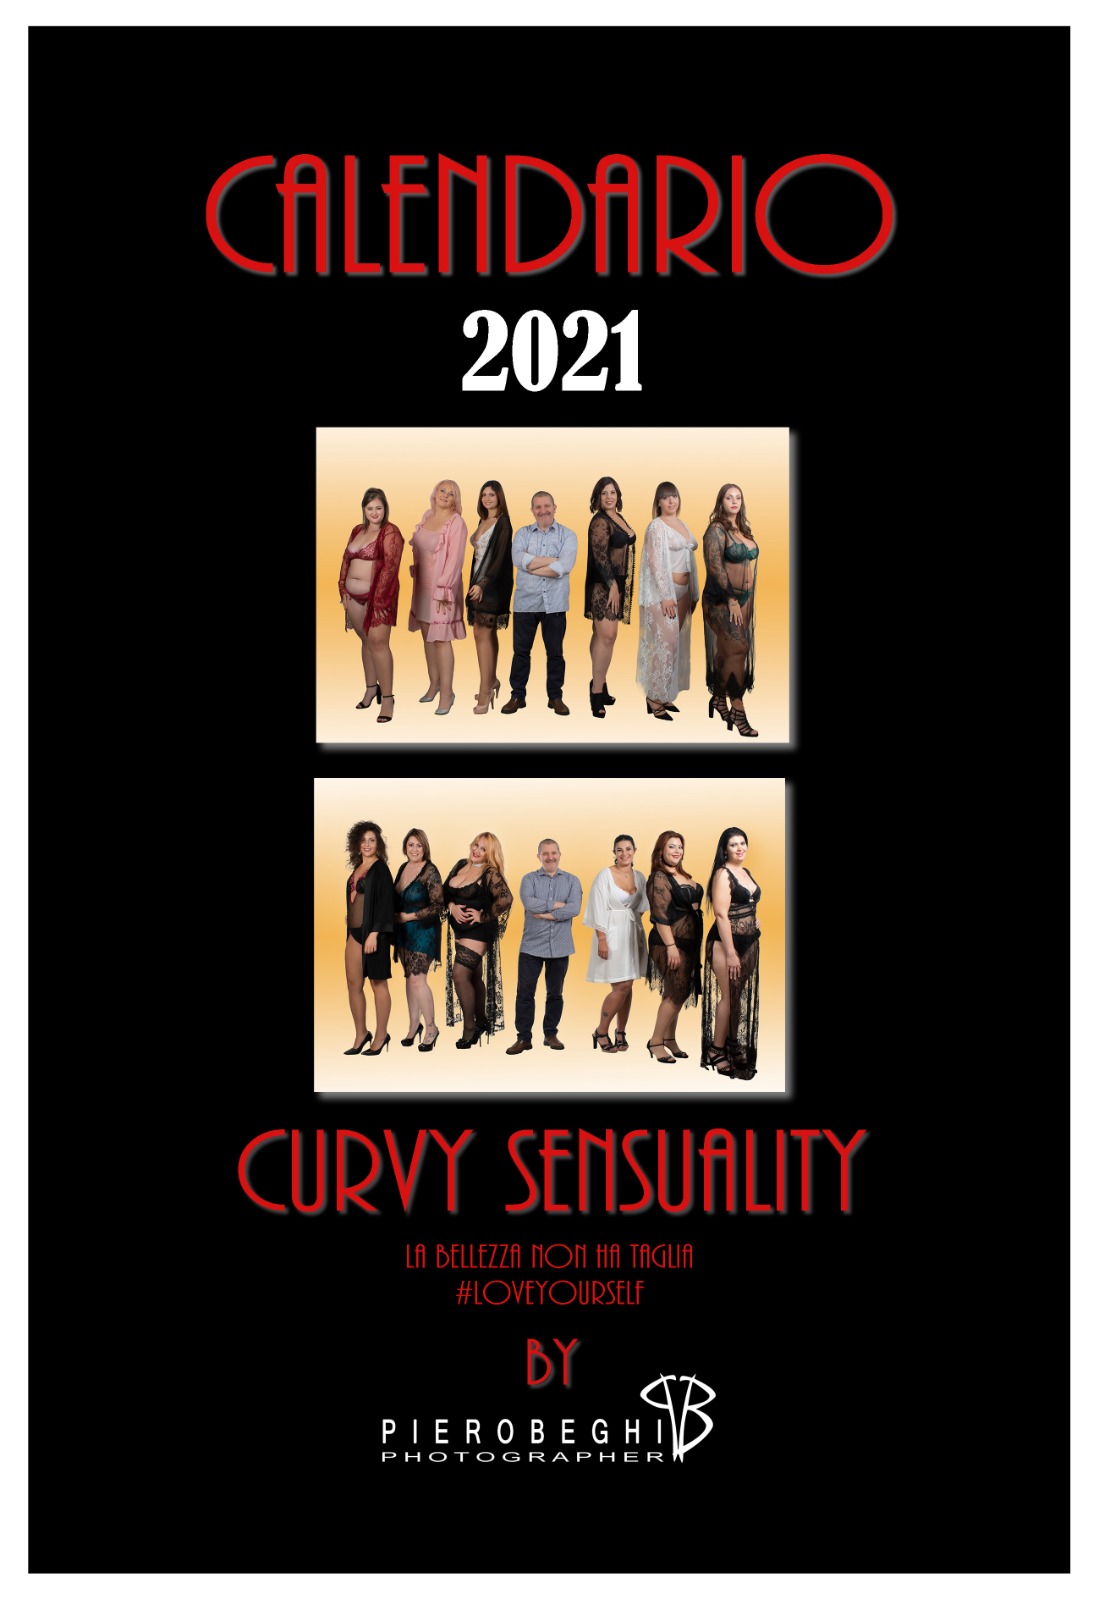 Calendario "Sensuality Curvy" 2021